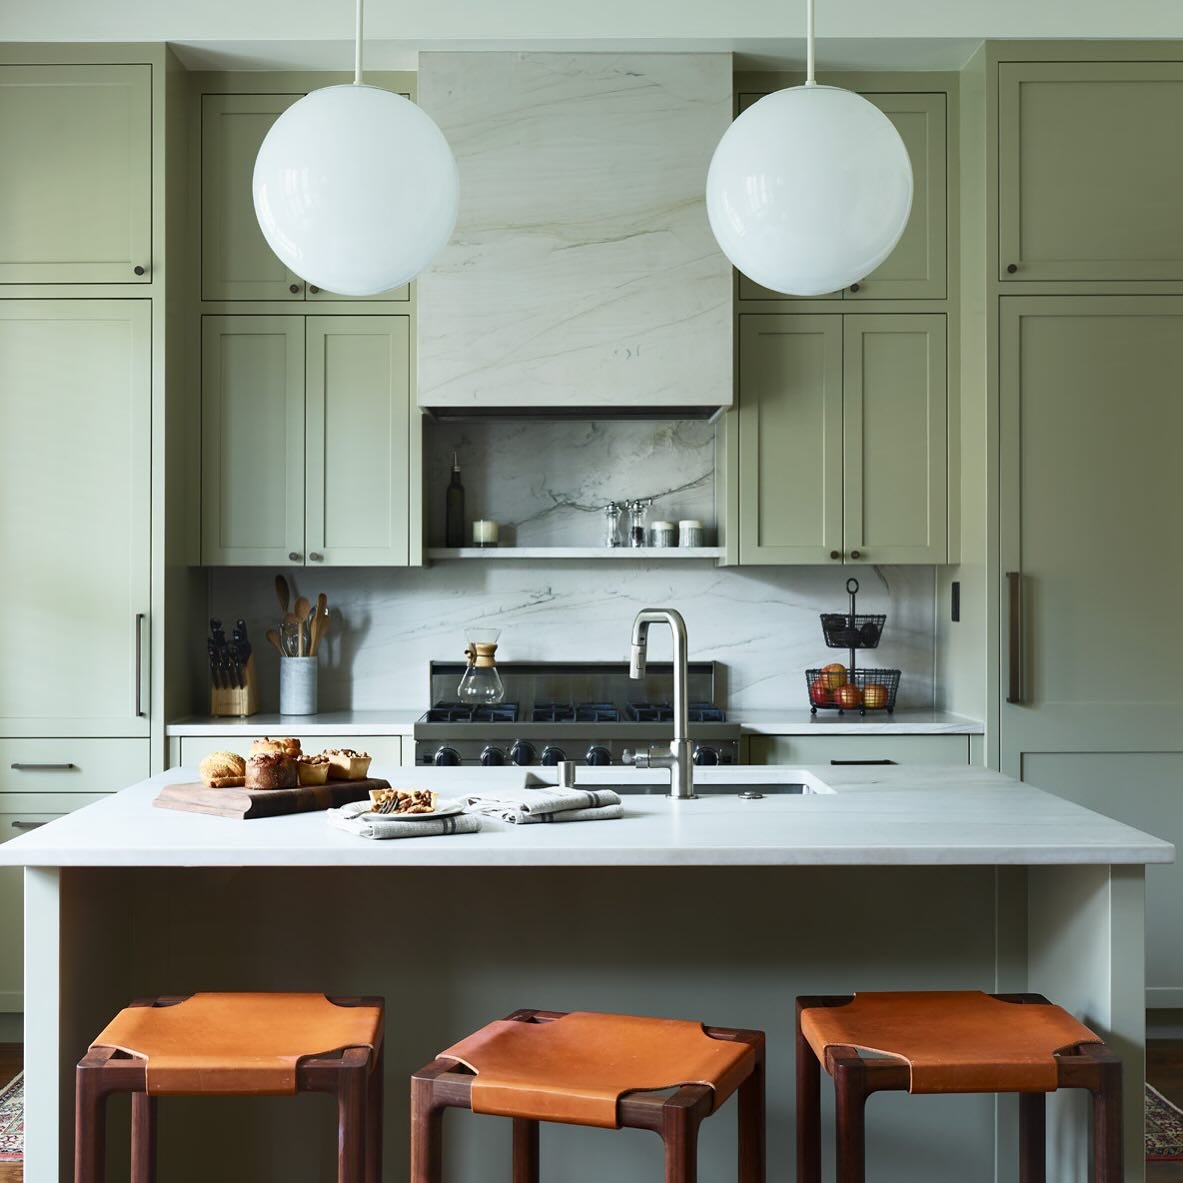 Kitchen goals @hudsoninteriordesigns @nouryello__architects @brayton_dee 📸 @jaredkuziaphoto #interiors #interiordesign #interiordesigner #kitchengoals #designinspiration #lighting